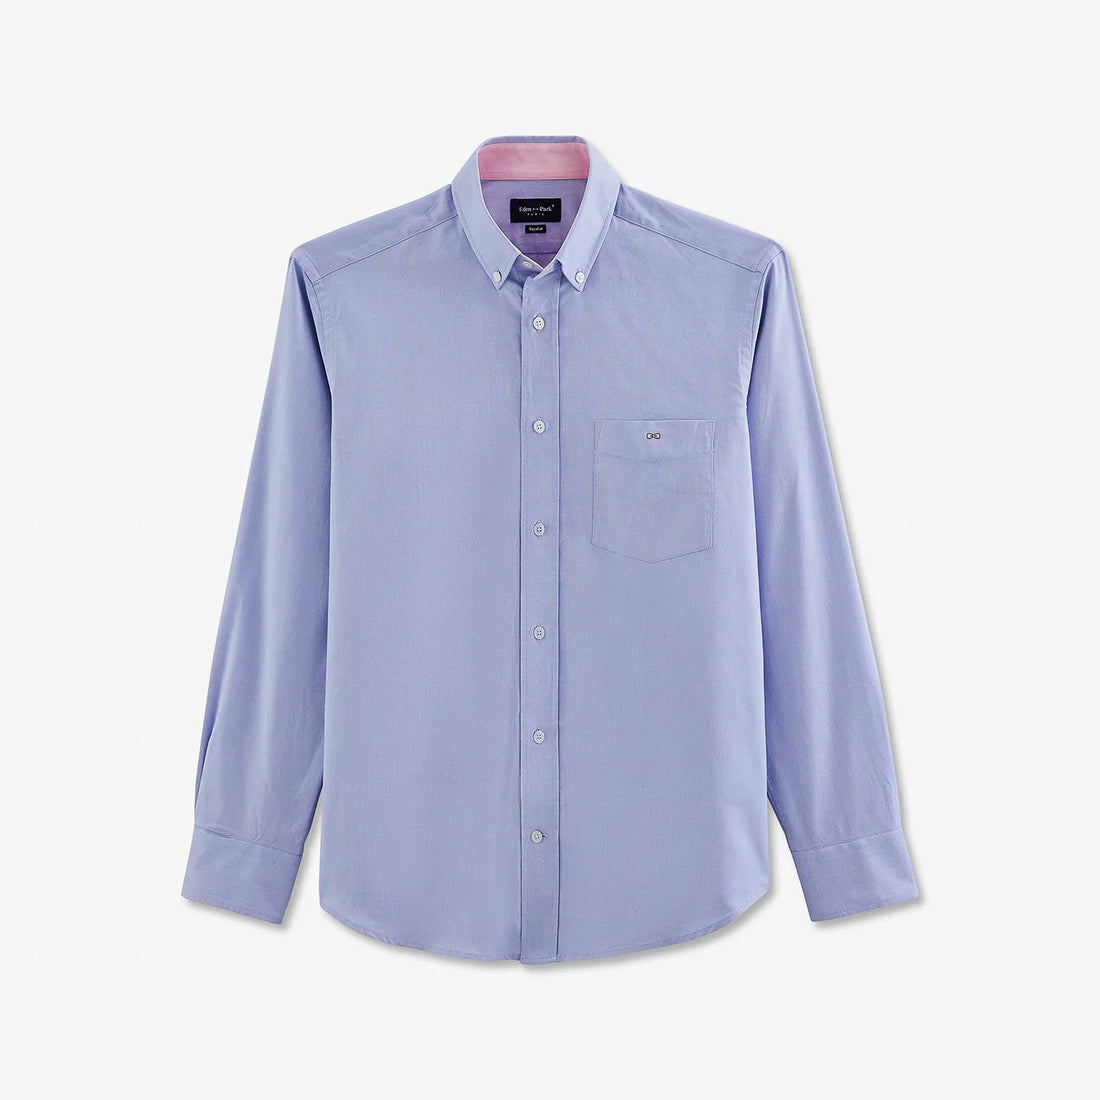 Plain Light Blue Cotton Shirt